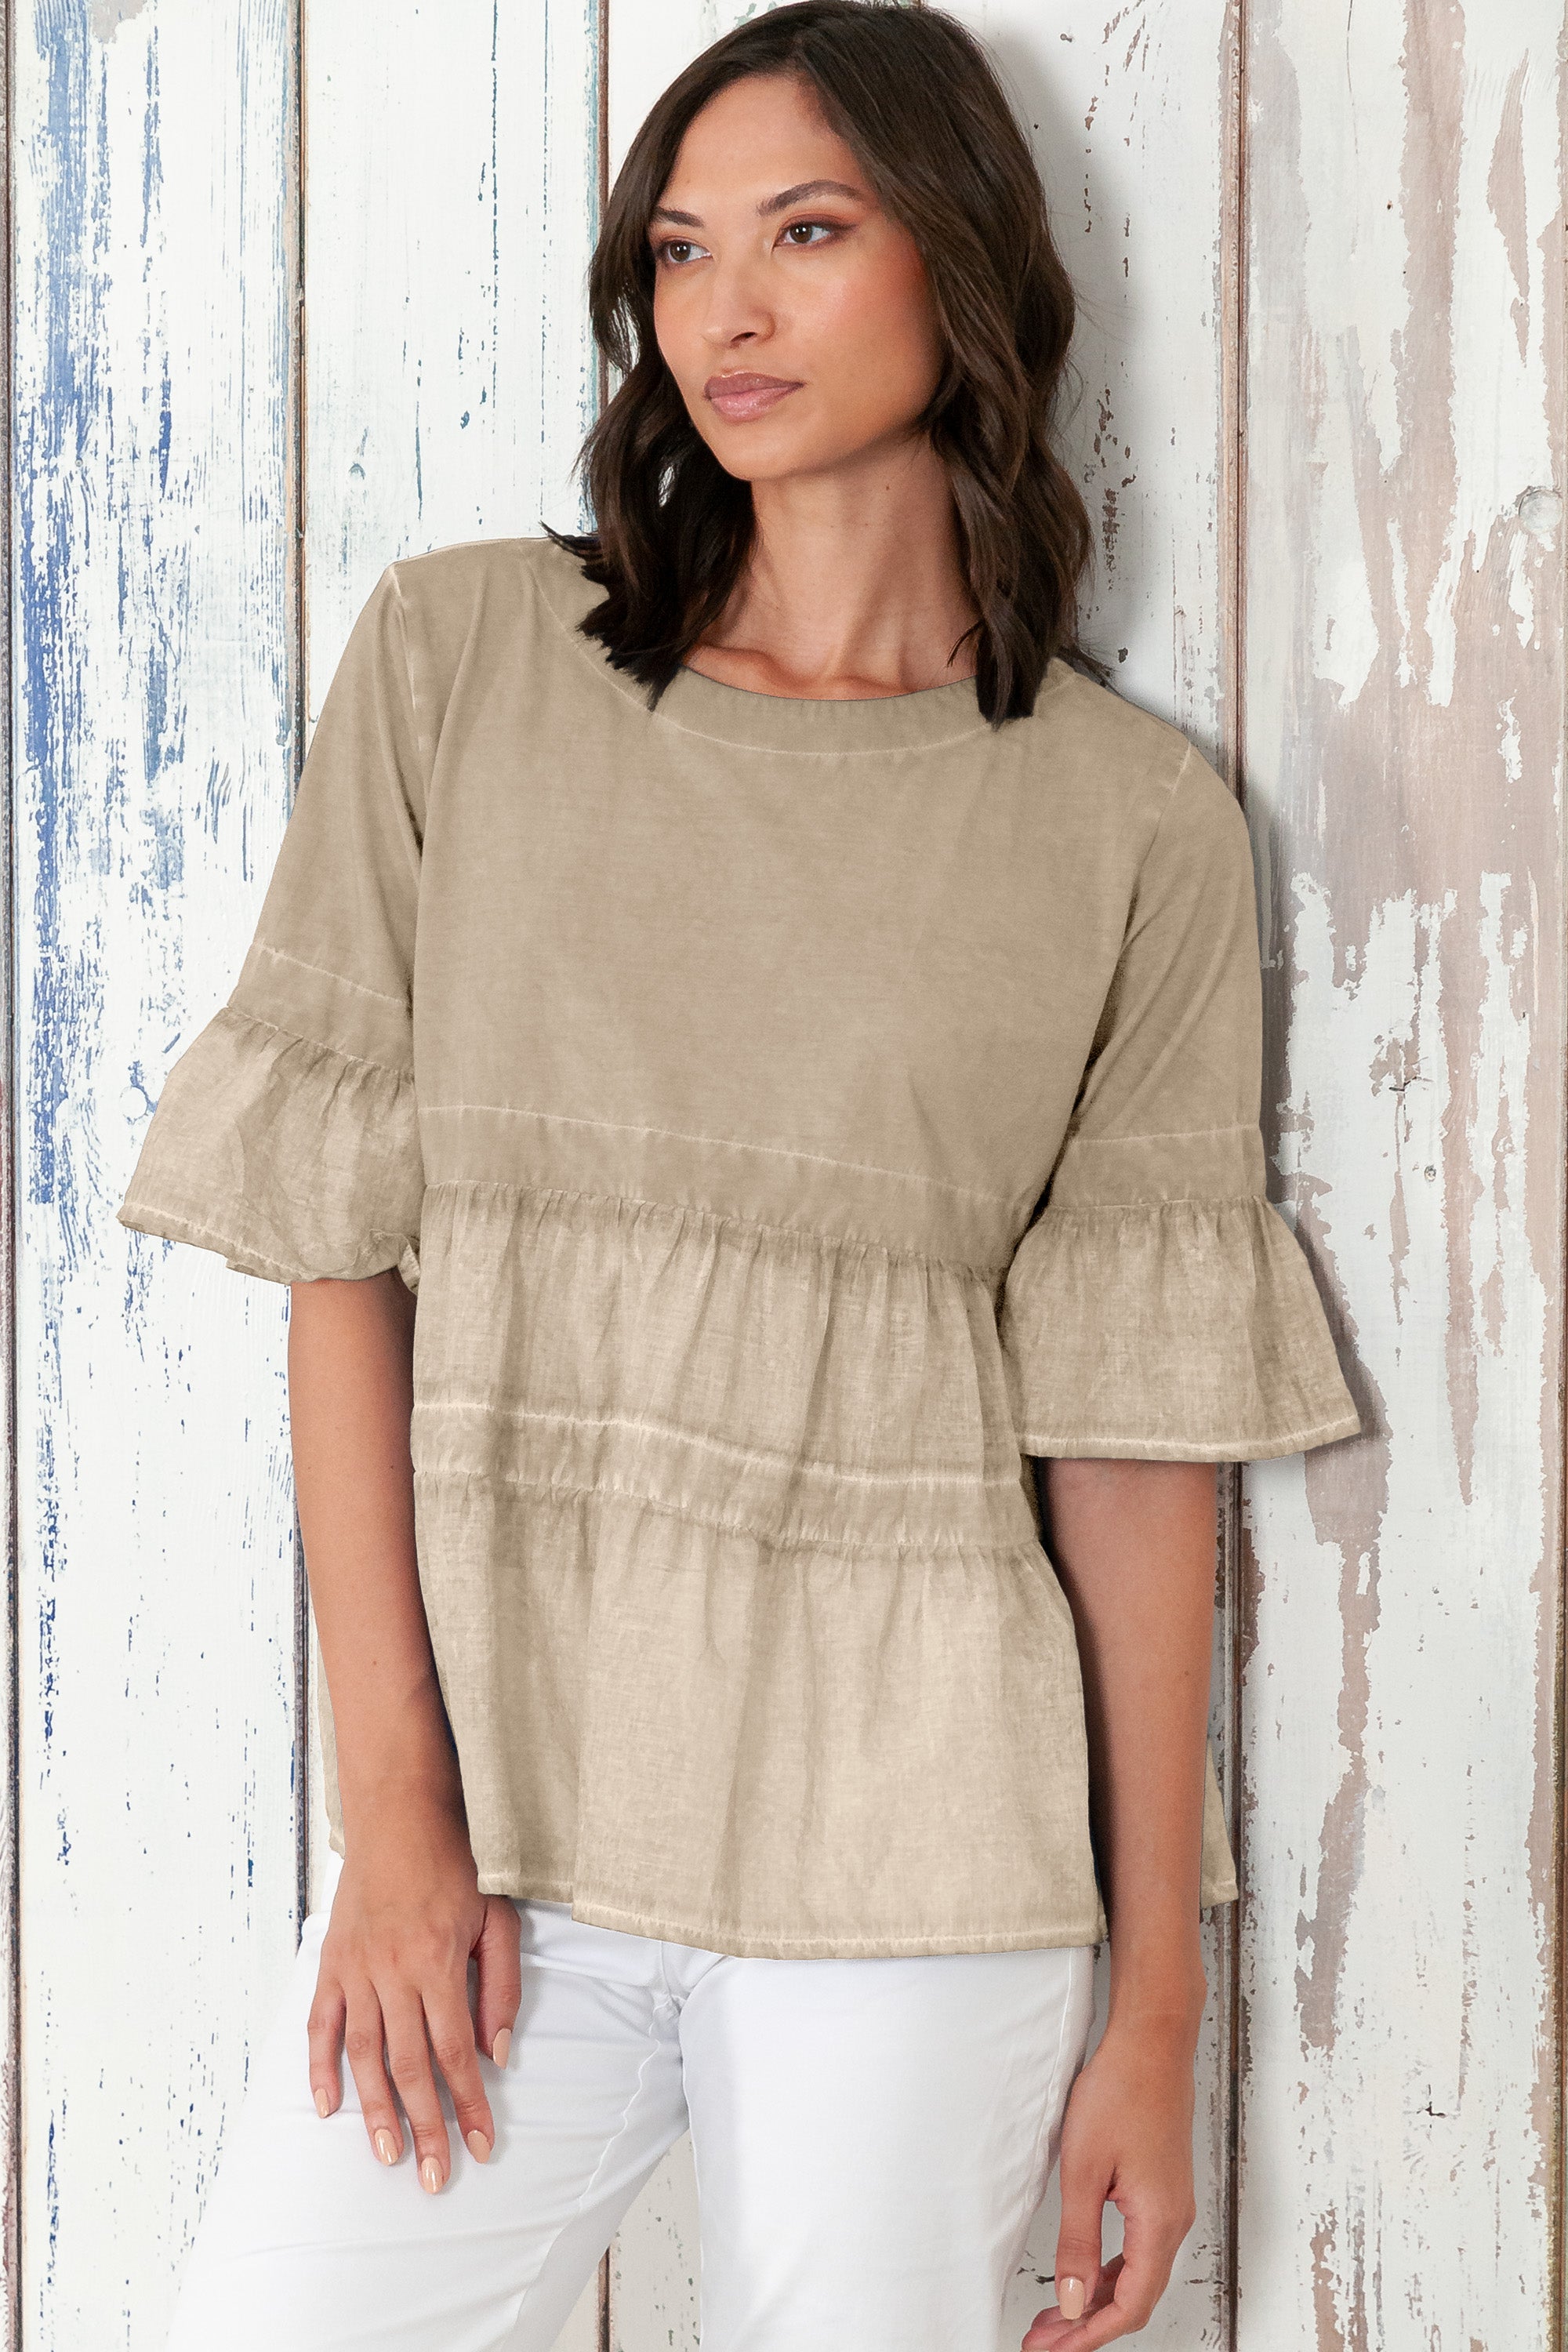 Pep T-Shirt - Women's Short Sleeve Peplum T-Shirt - Harbor